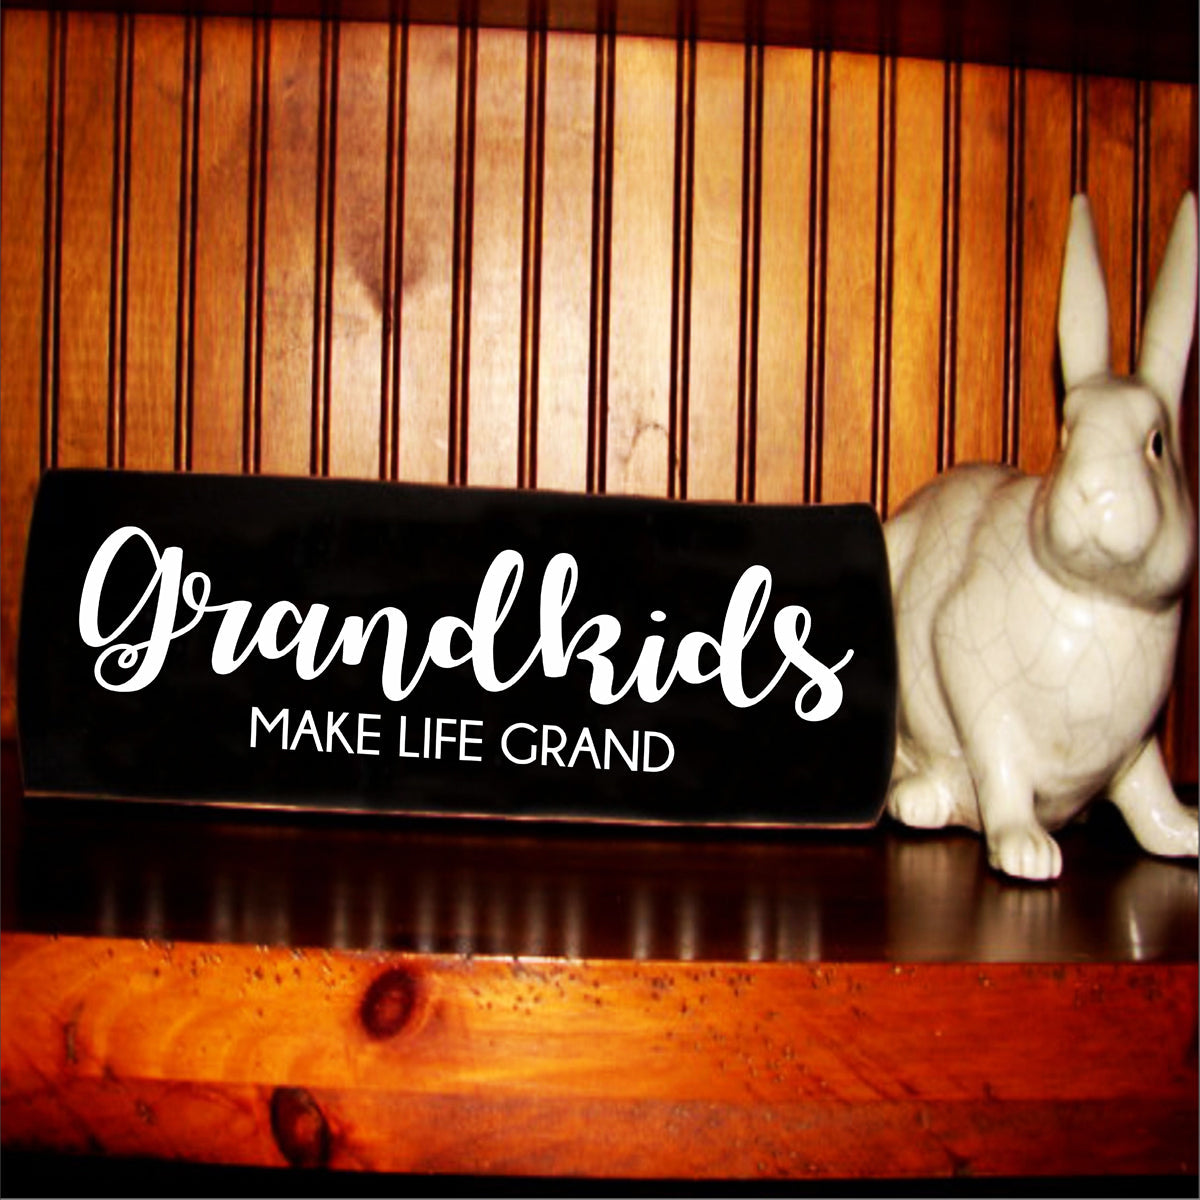 Grandkids Make Life Grand Stencil - Superior Stencils